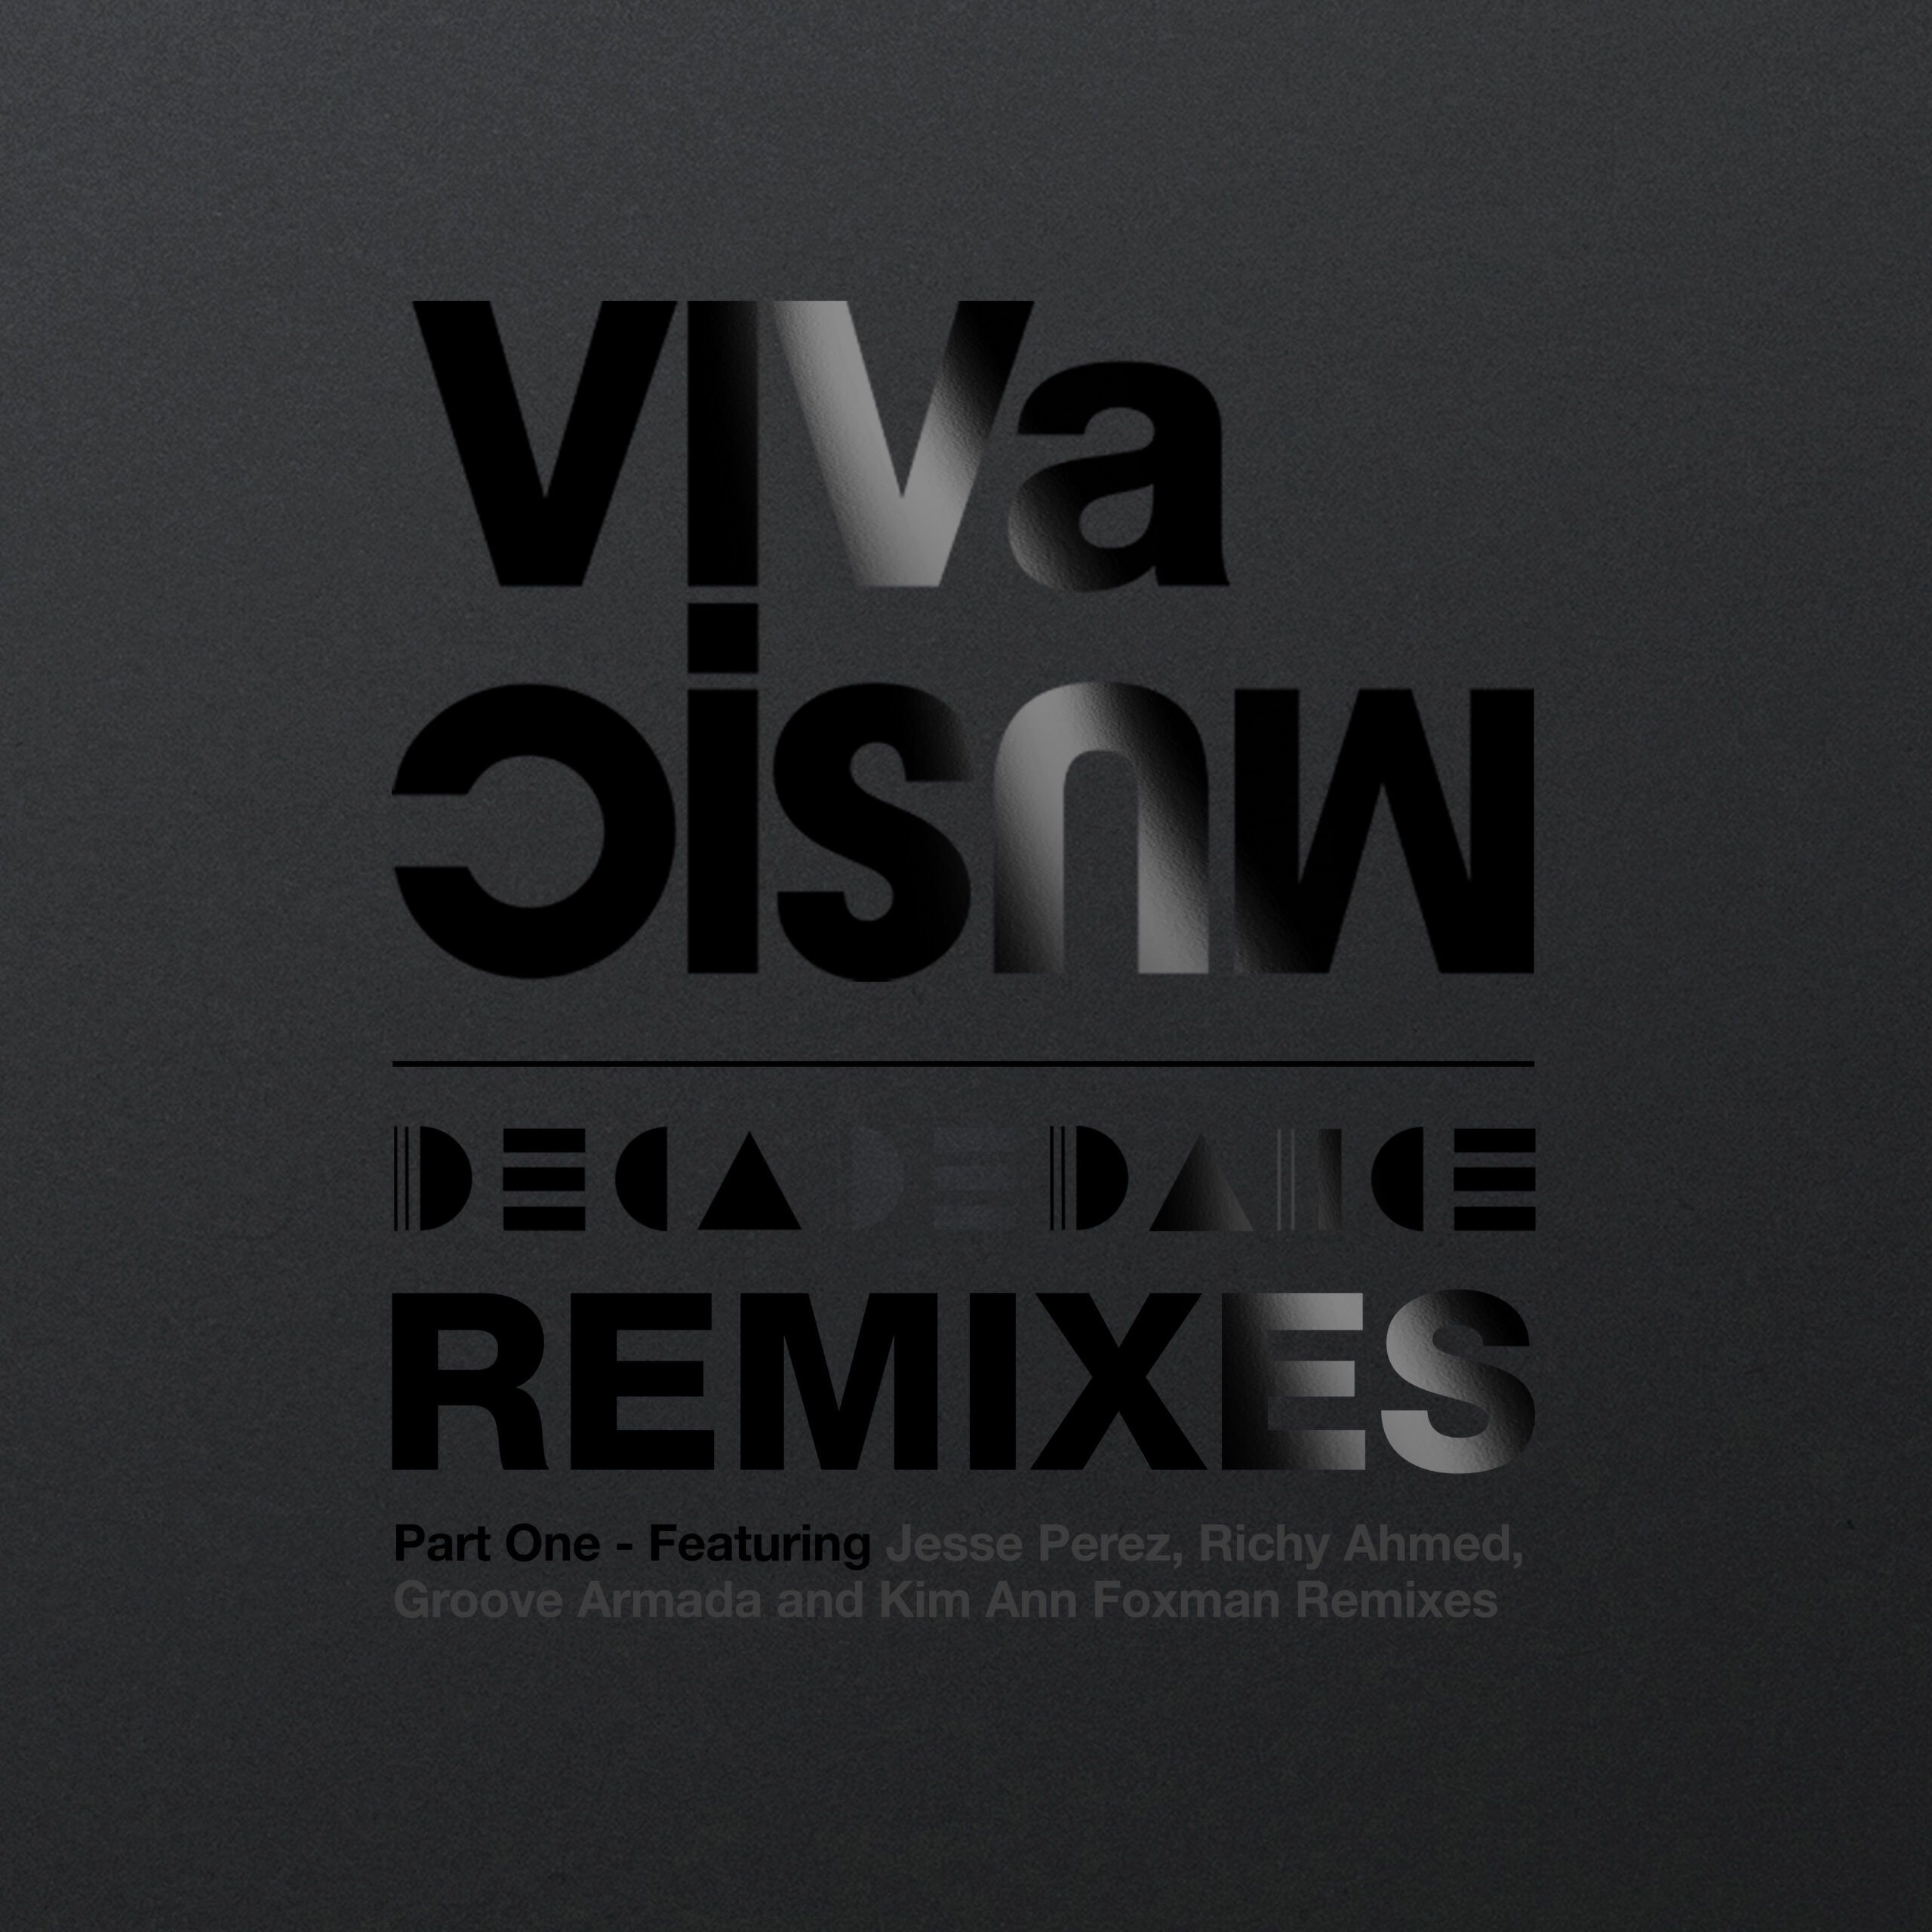 viva-10years-remixes-partone.jpg